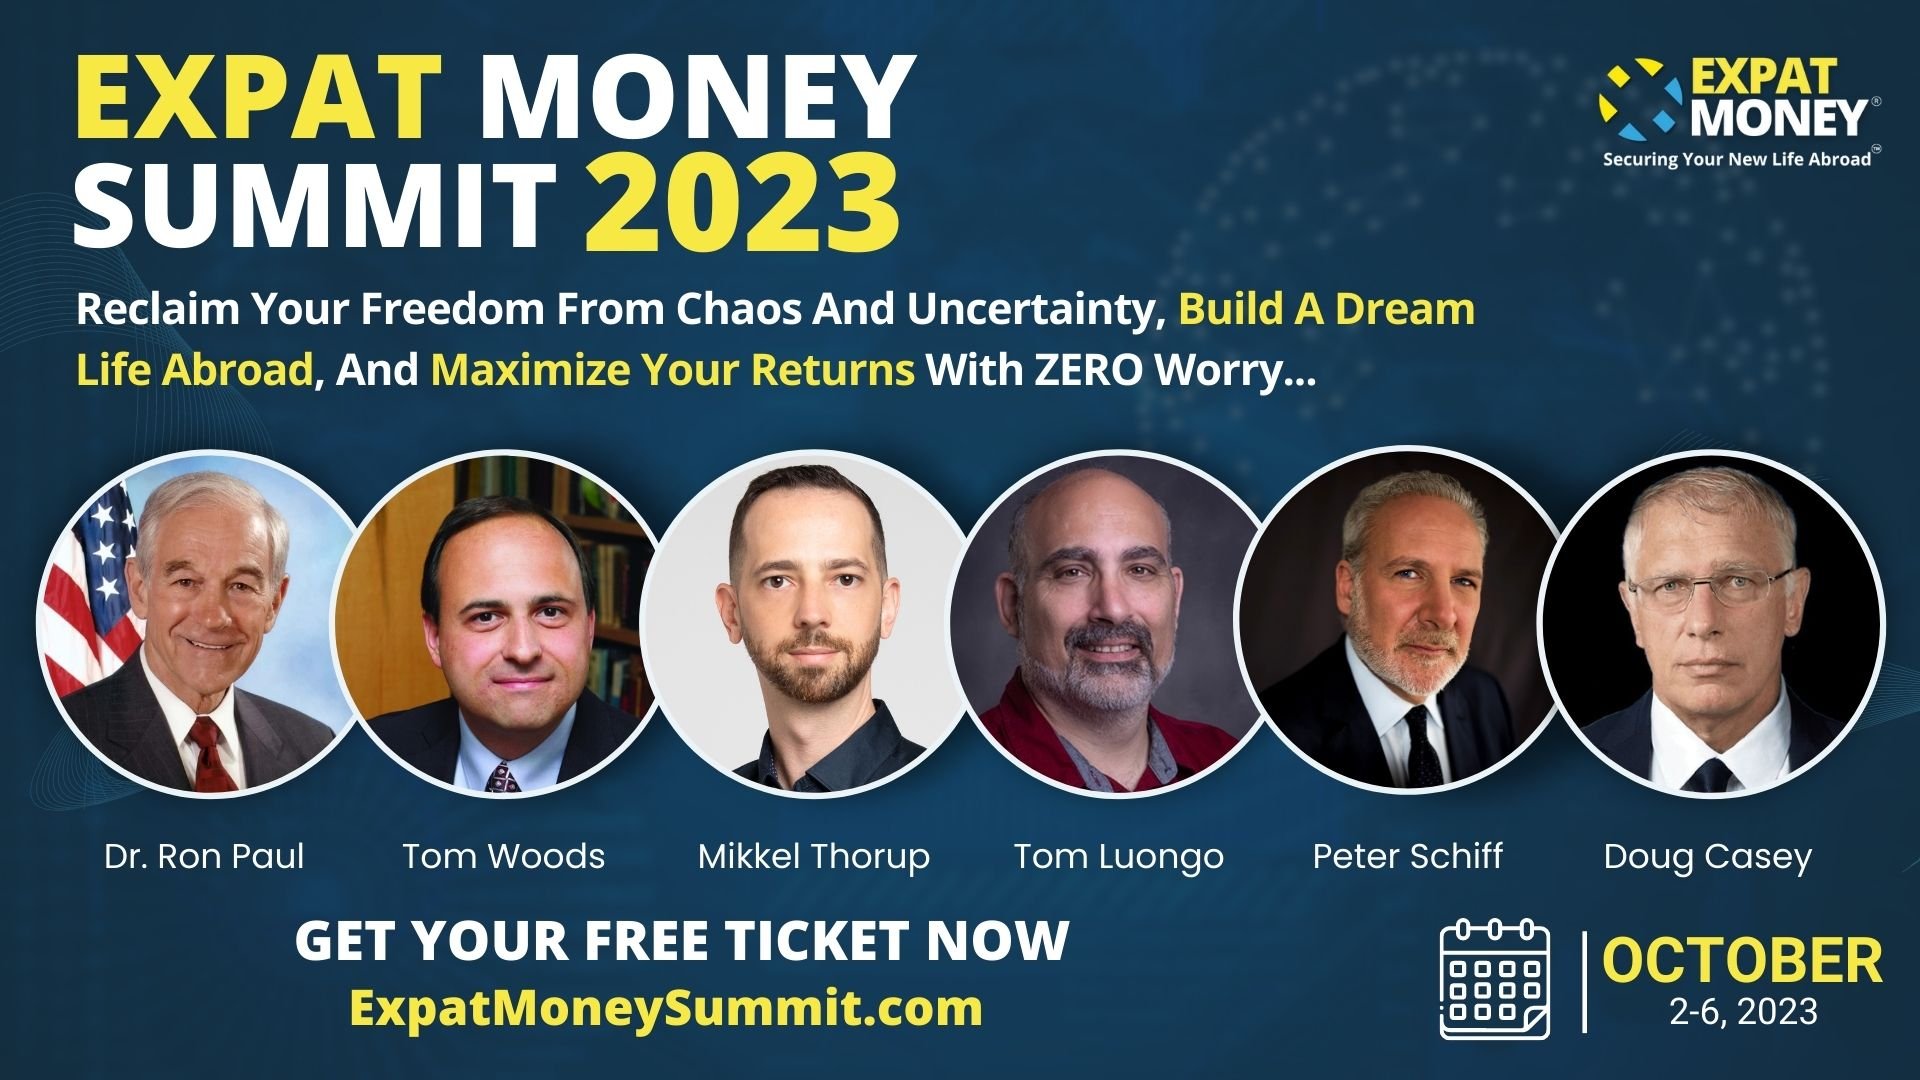 The Expat Money Summit 2023